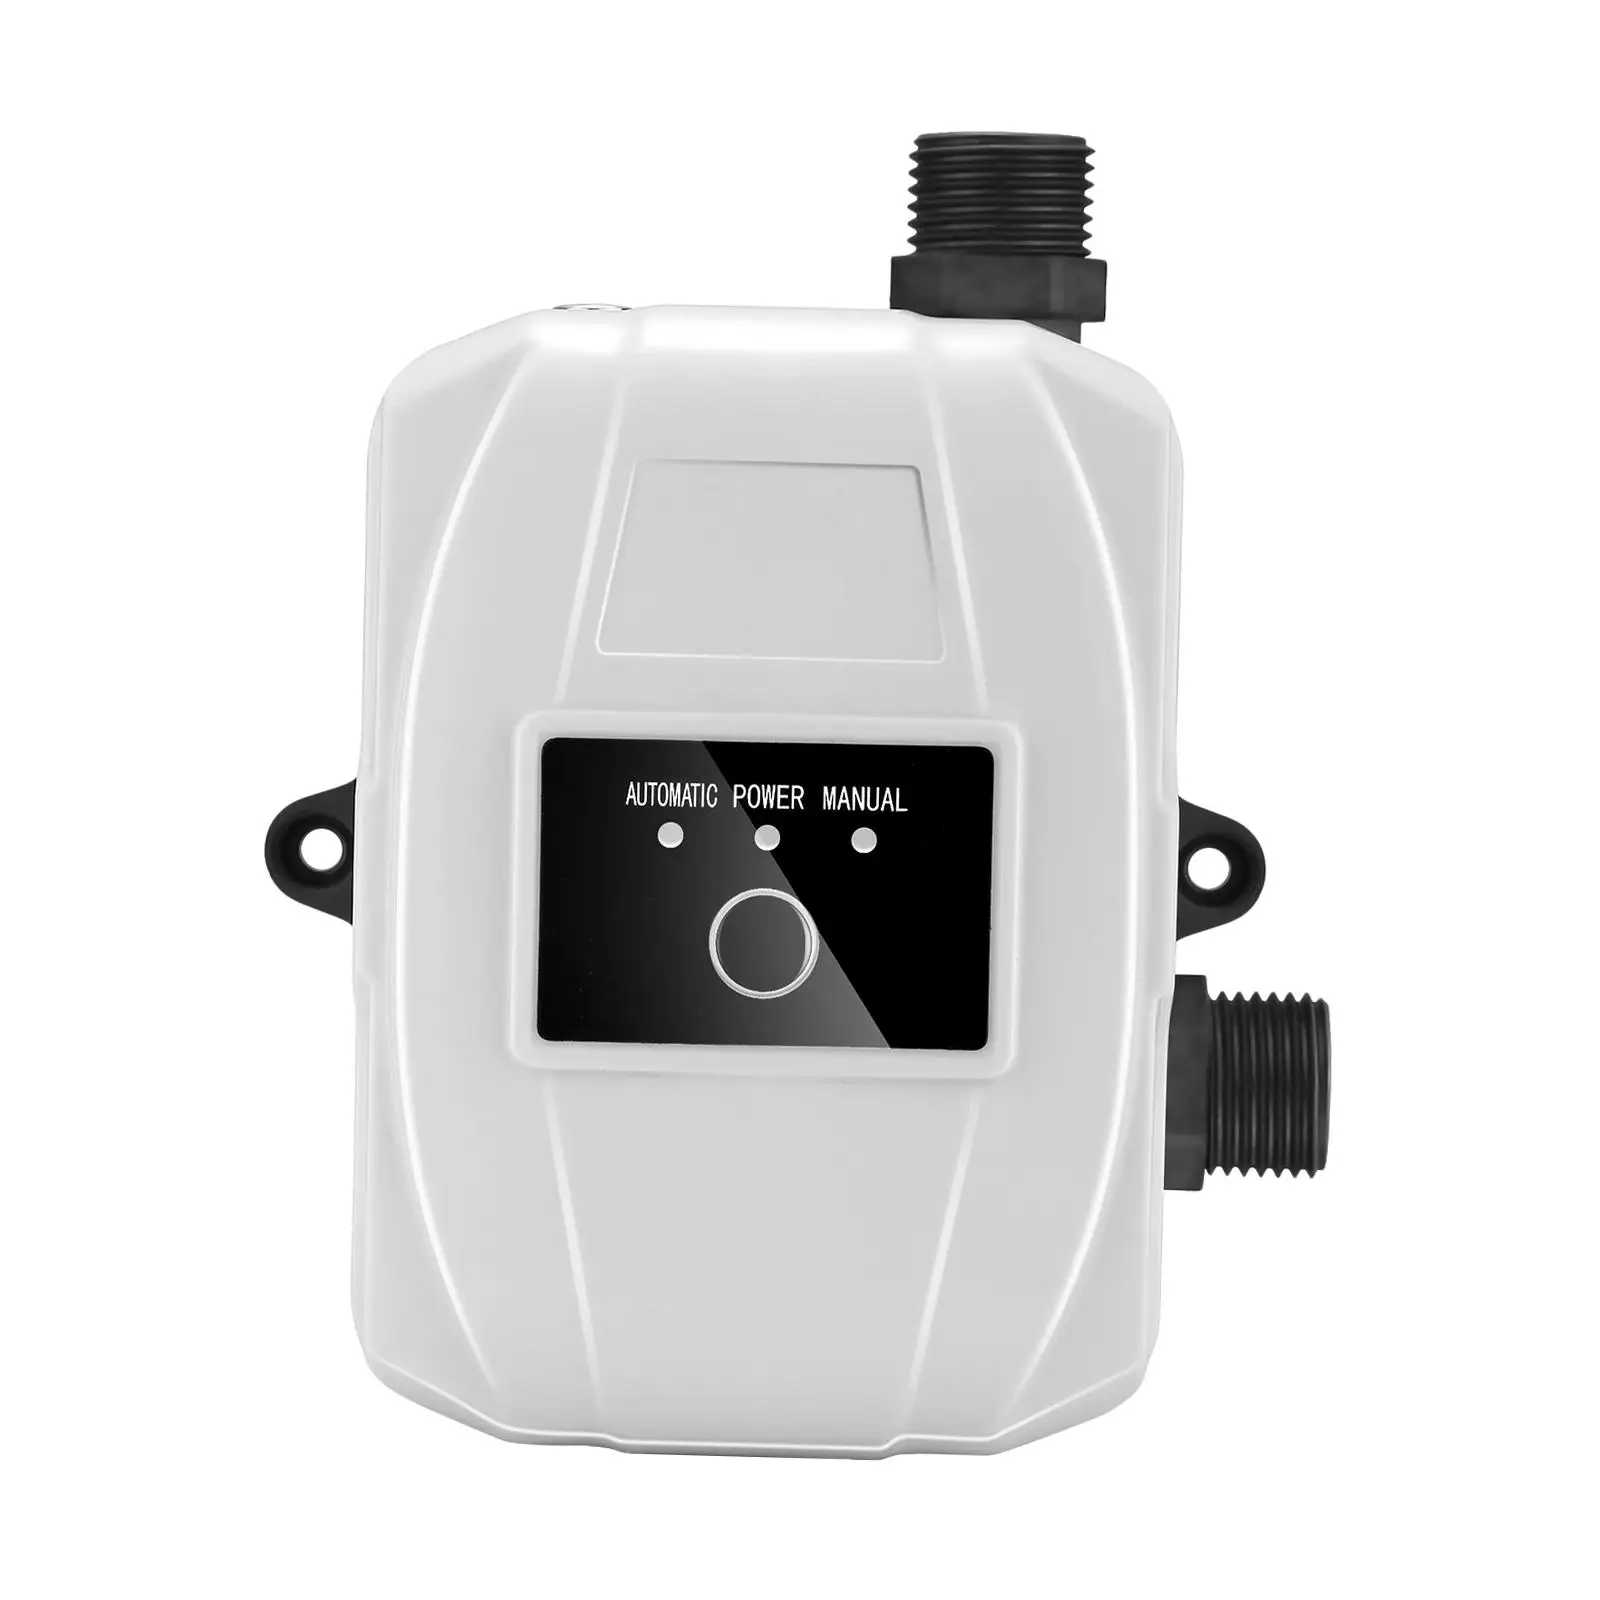 Water Pressure Booster Pump DC 24V for Solar Heater Faucet Shower Bathroom